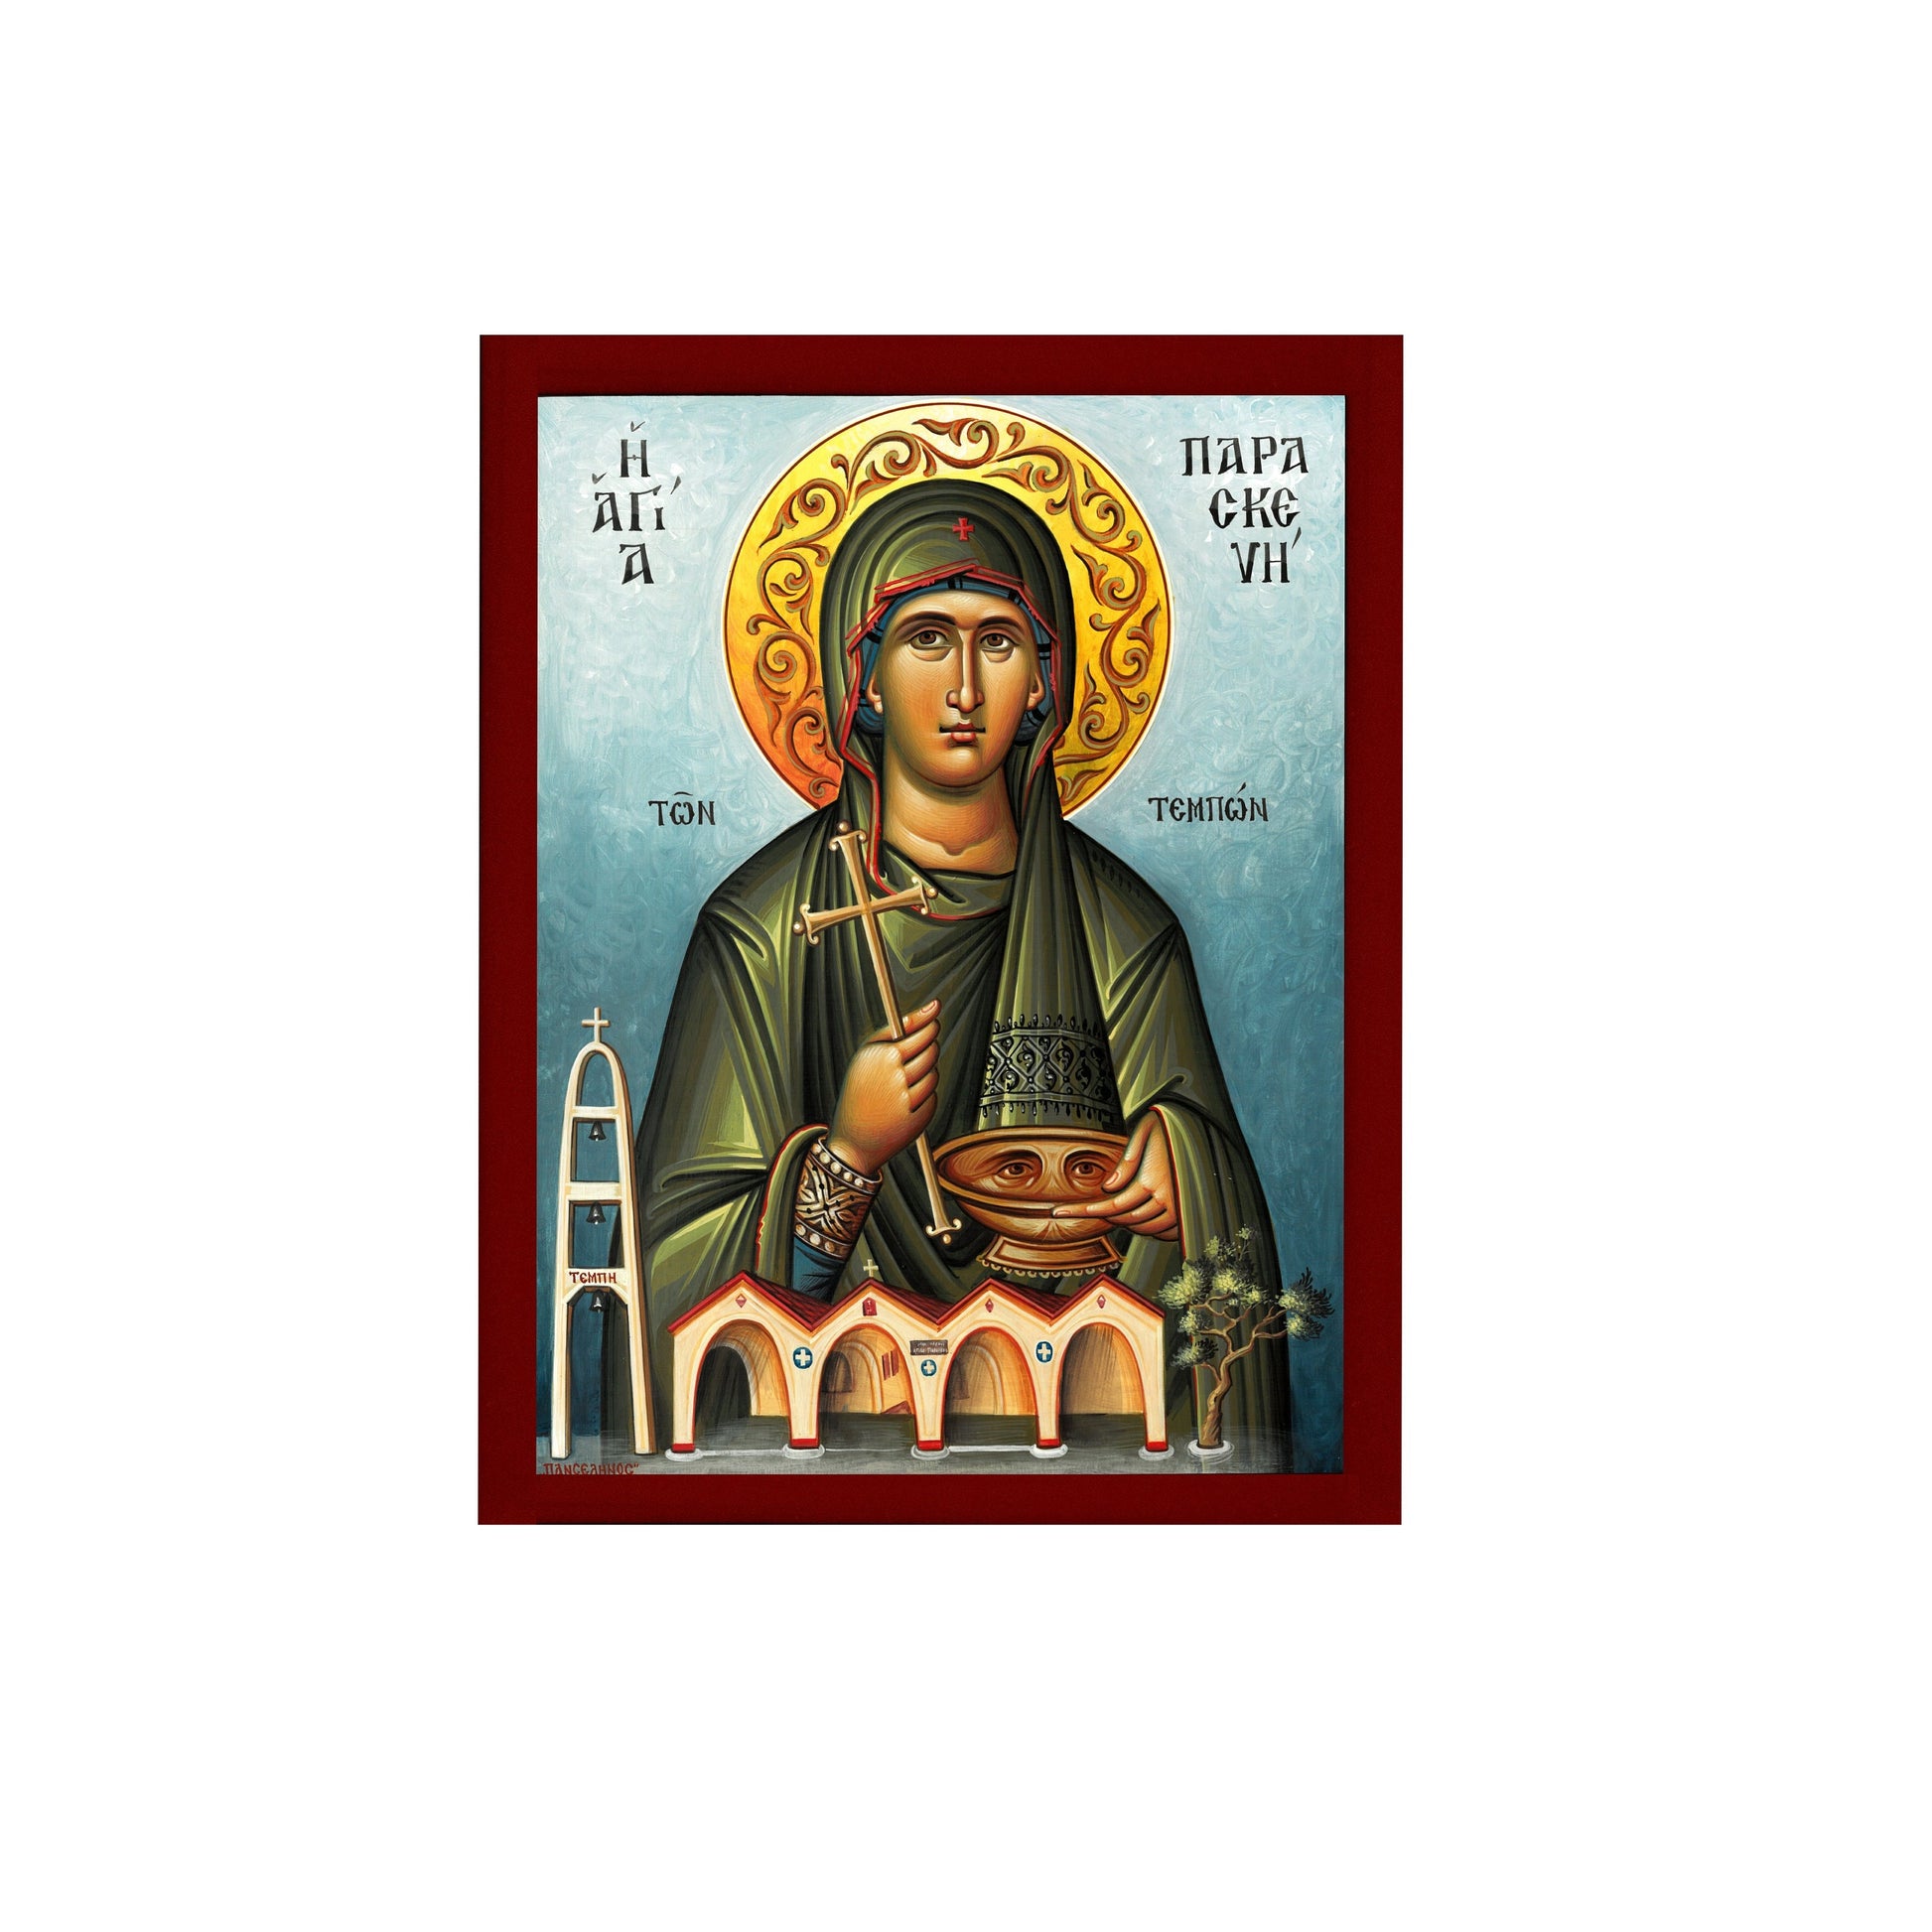 Saint Paraskevi icon, Handmade Greek Orthodox icon of St Paraskevi of Rome, Byzantine art wall hanging icon plaque, religious decor TheHolyArt